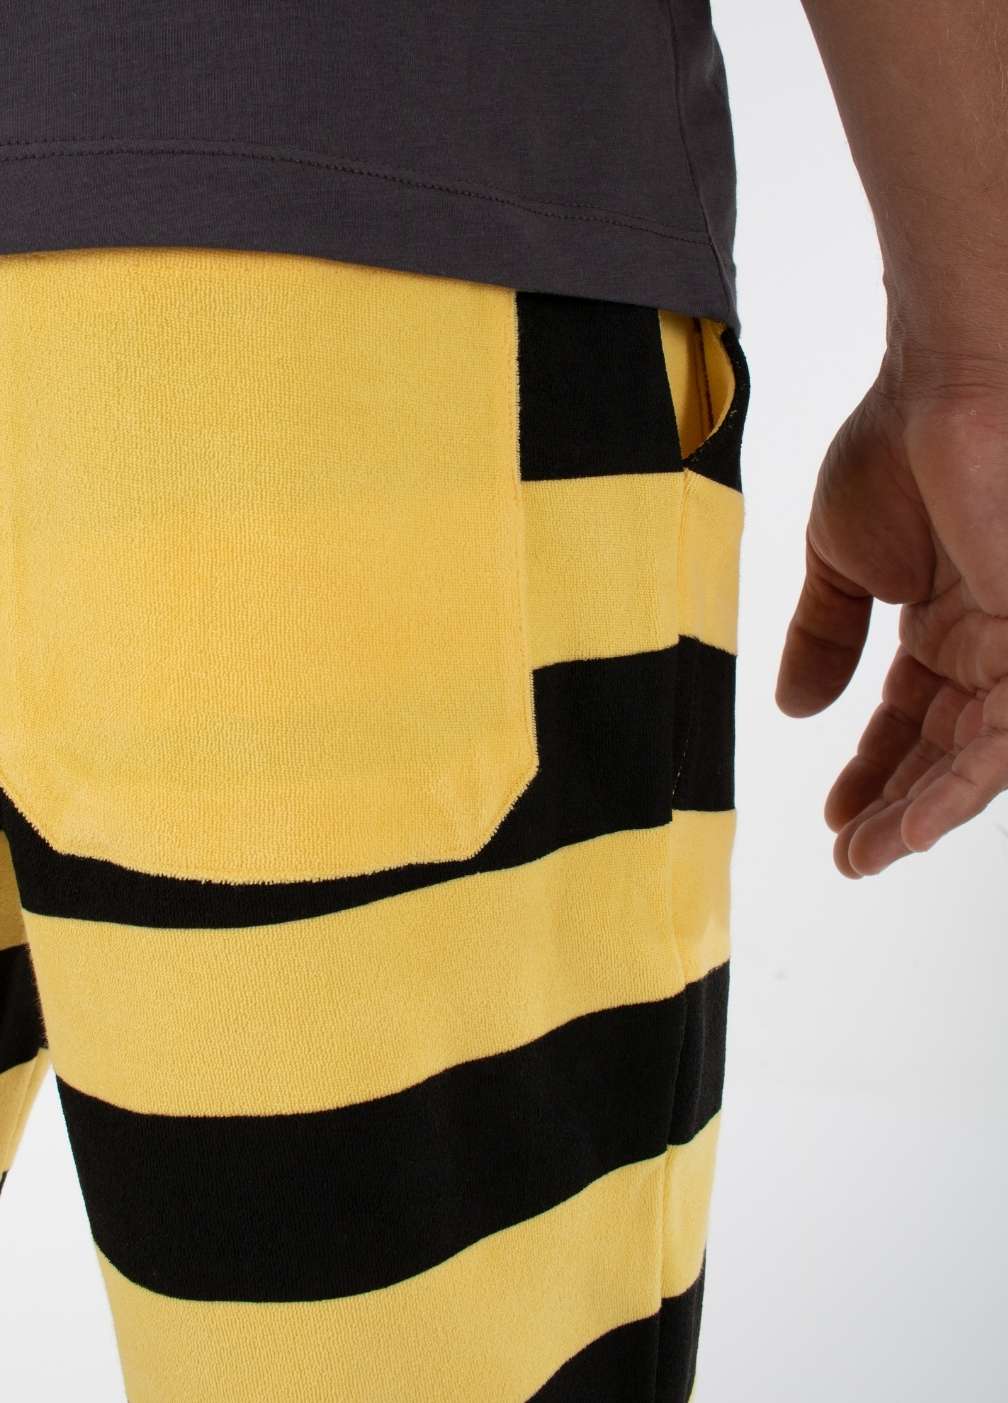 YARROW TOWEL SHORTS ST closeup - back pocket - men's shorts with single back pocket